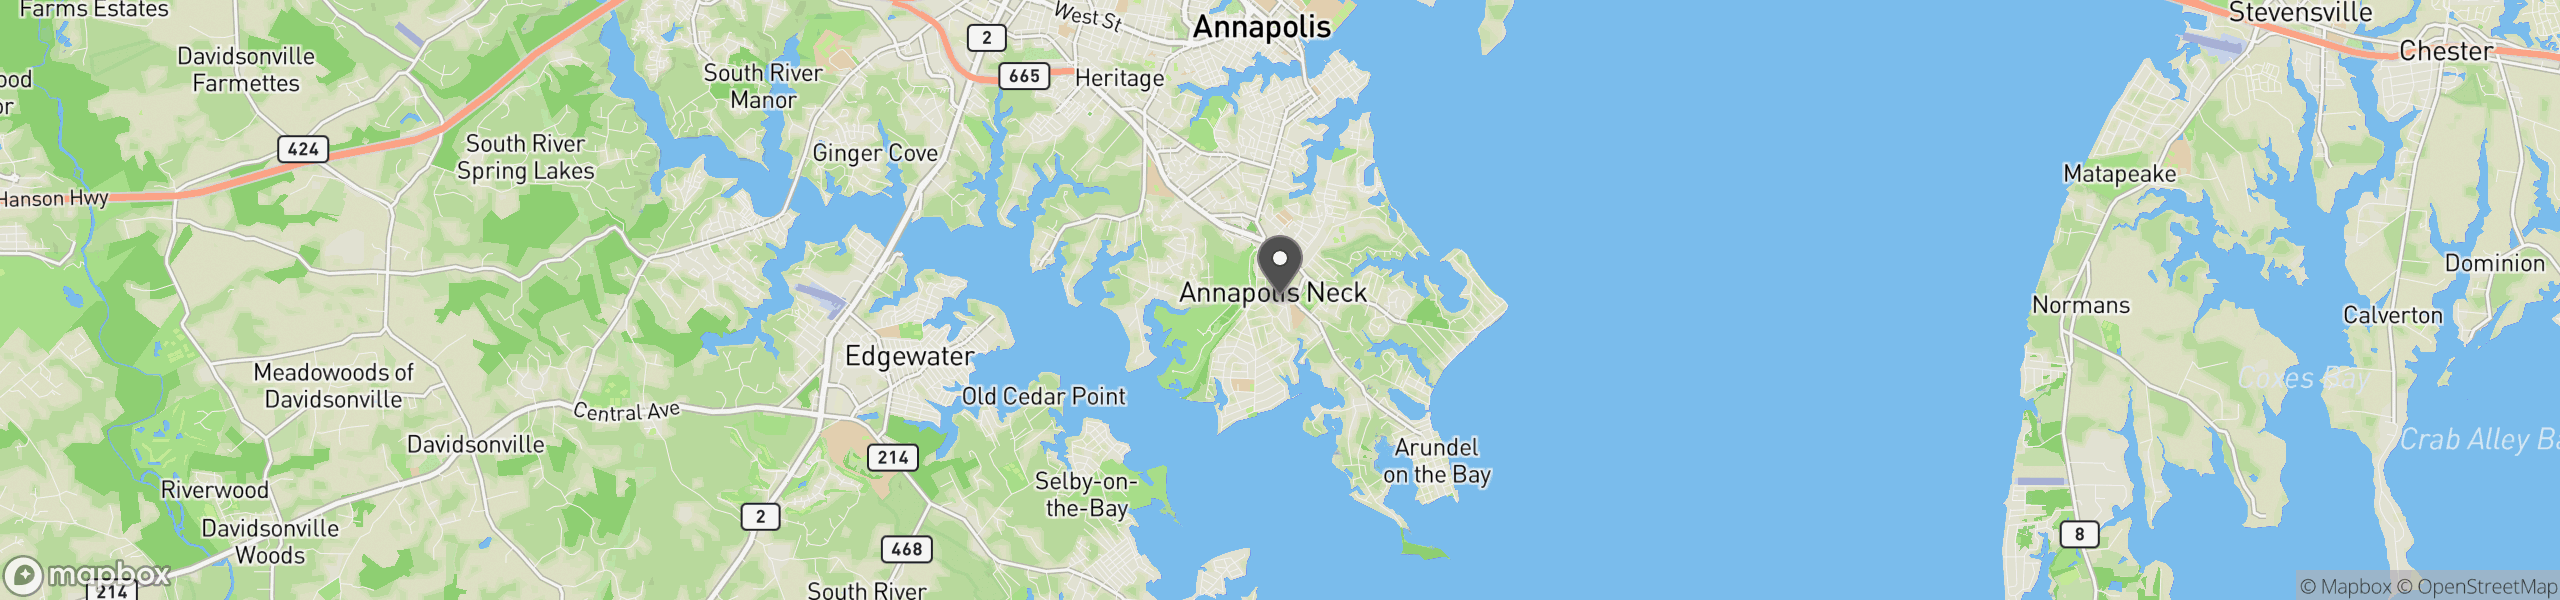 Annapolis, MD 21403